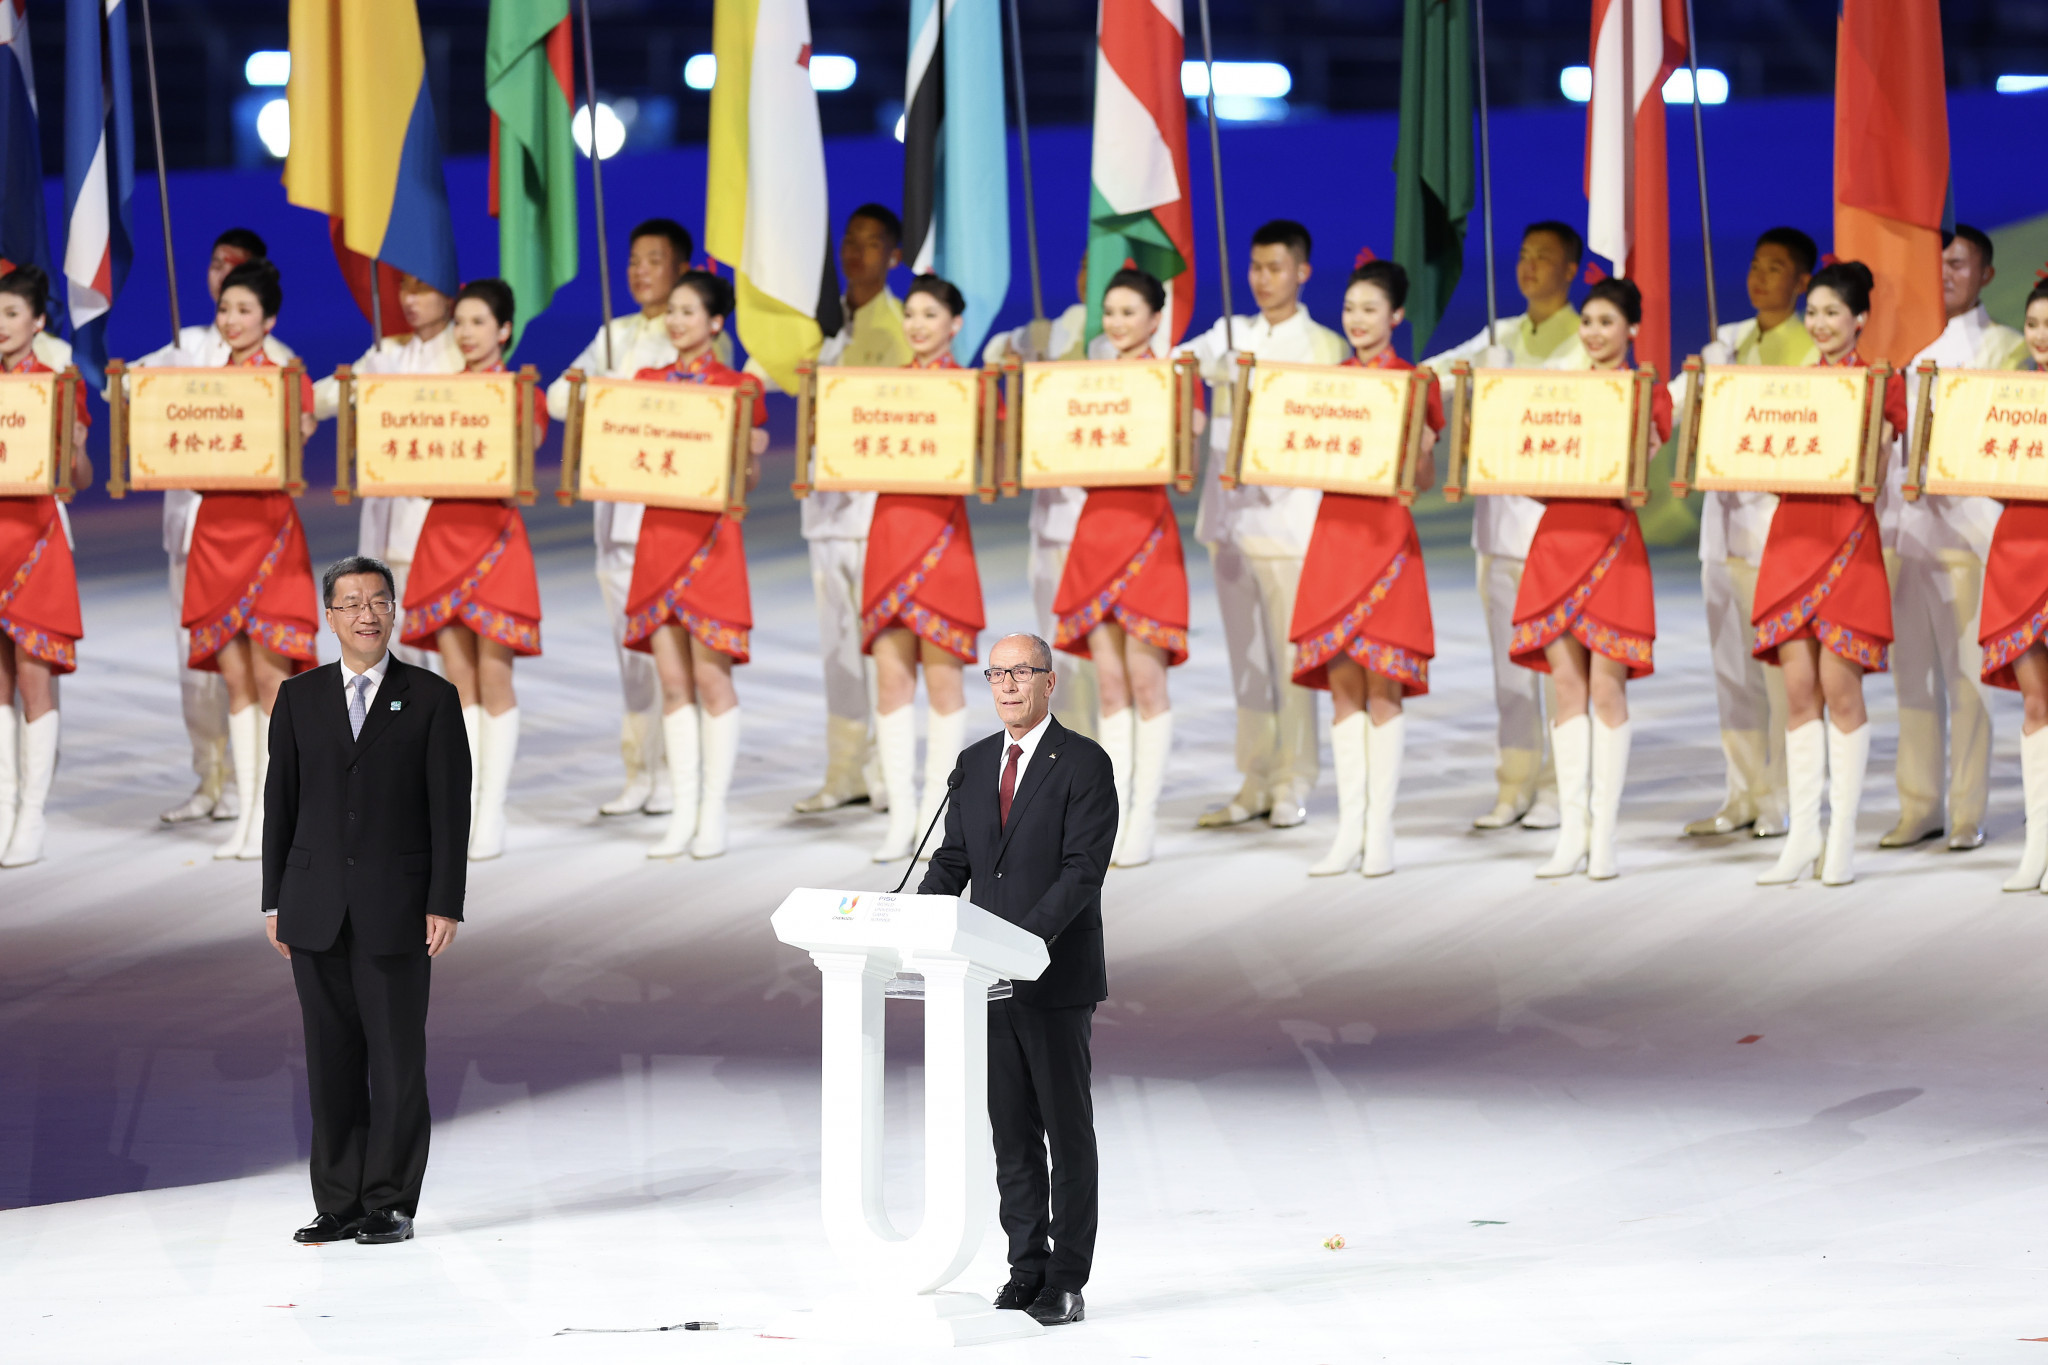 FISU President Leonz Eder praised athletes for their 